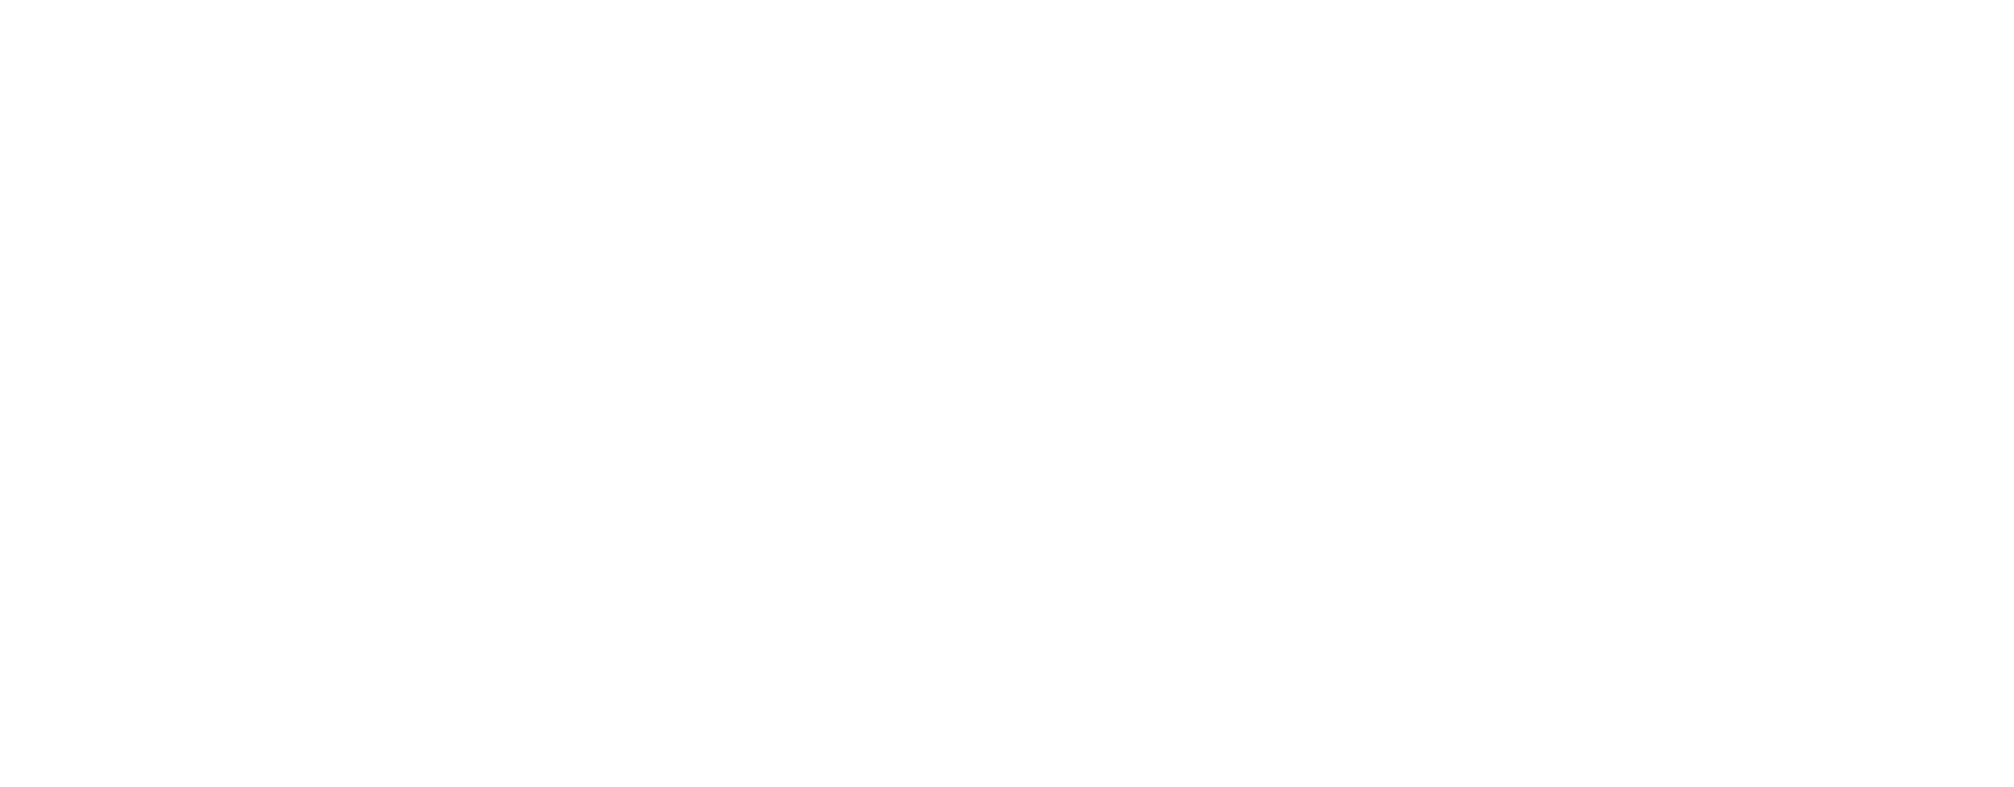 Waterkeeper Alliance Member logo